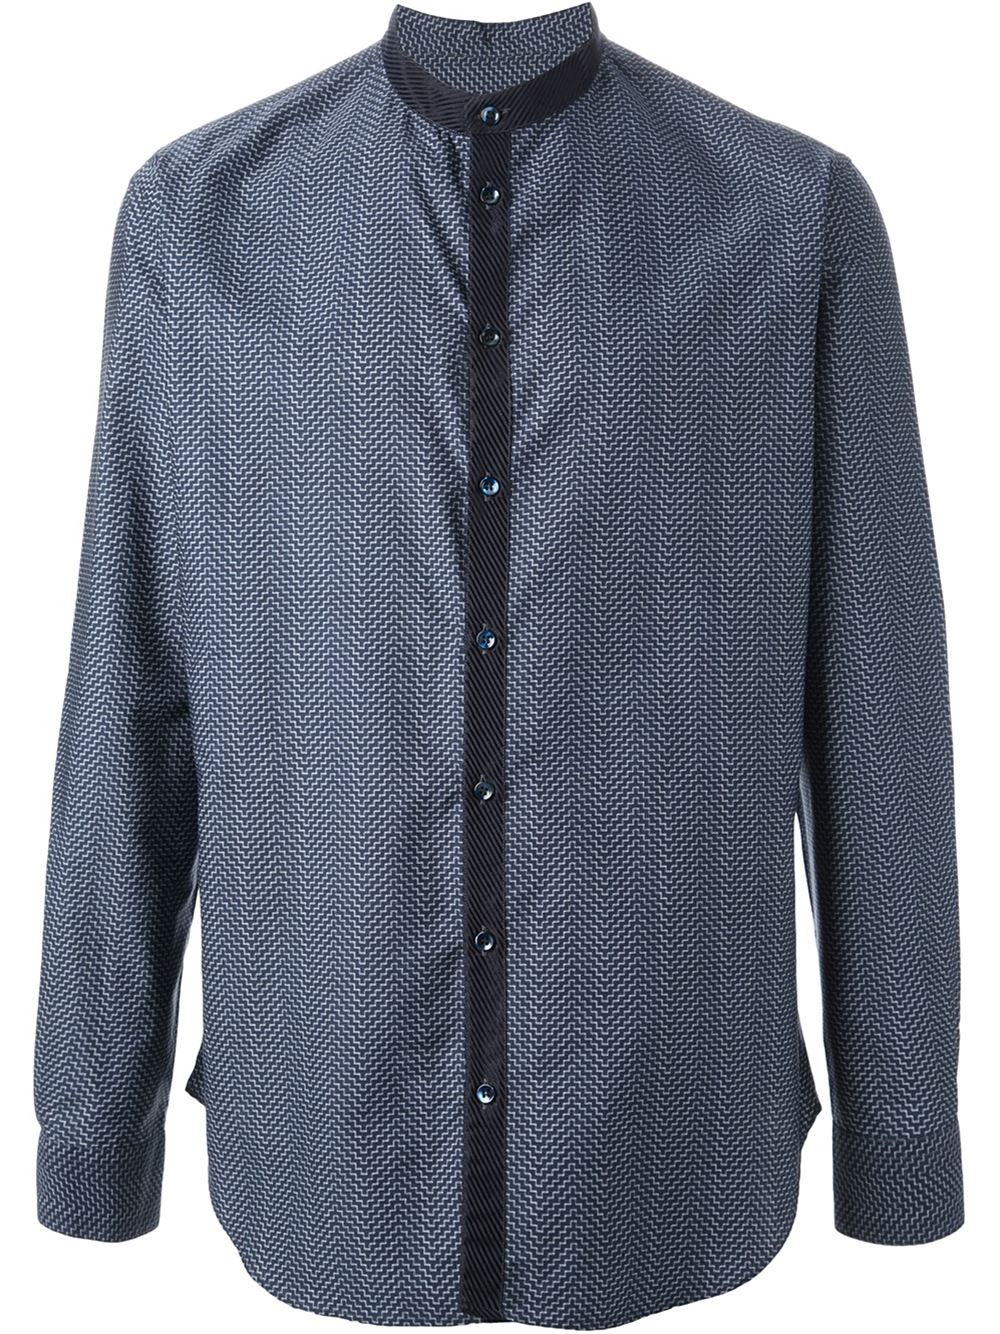 Giorgio Armani 'Geometric Guru' Shirt in Blue for Men - Lyst